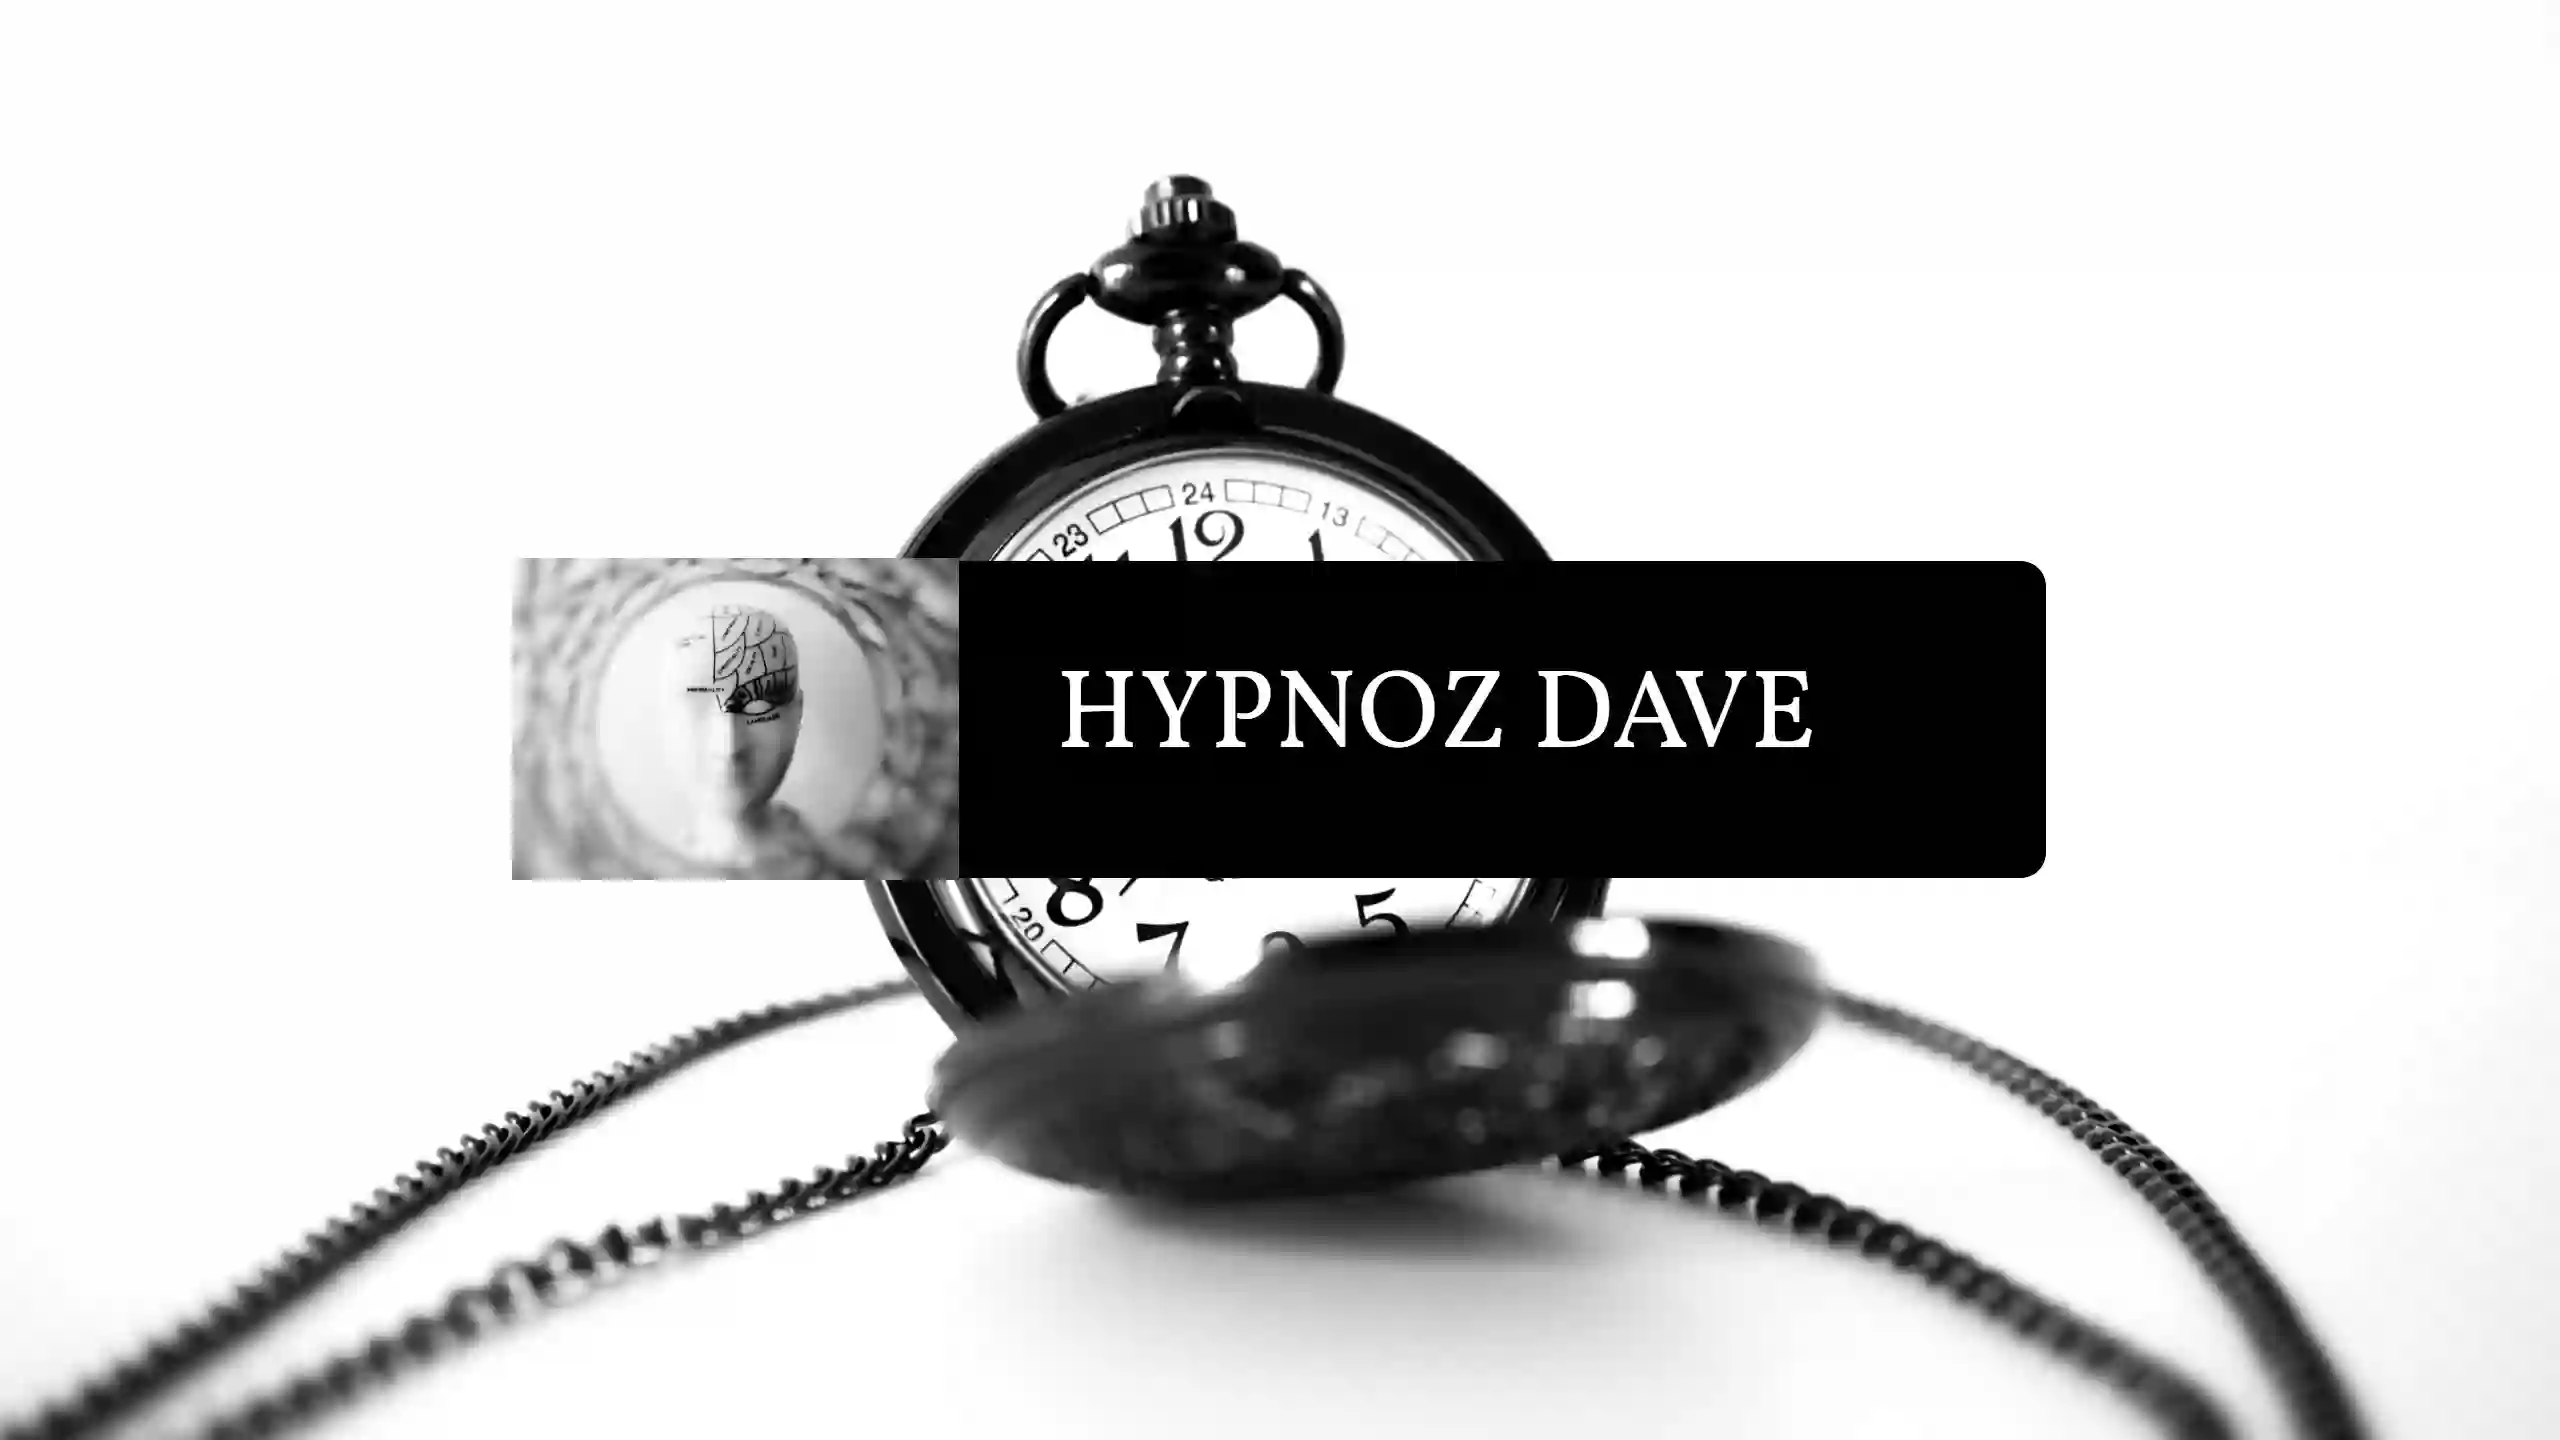 Hypnozdave - David Carrau -Thérapeute Praticien - EFT/Hypnose/Reiki/Coaching/Lithothérapie/Magnétisme/Radiesthésie